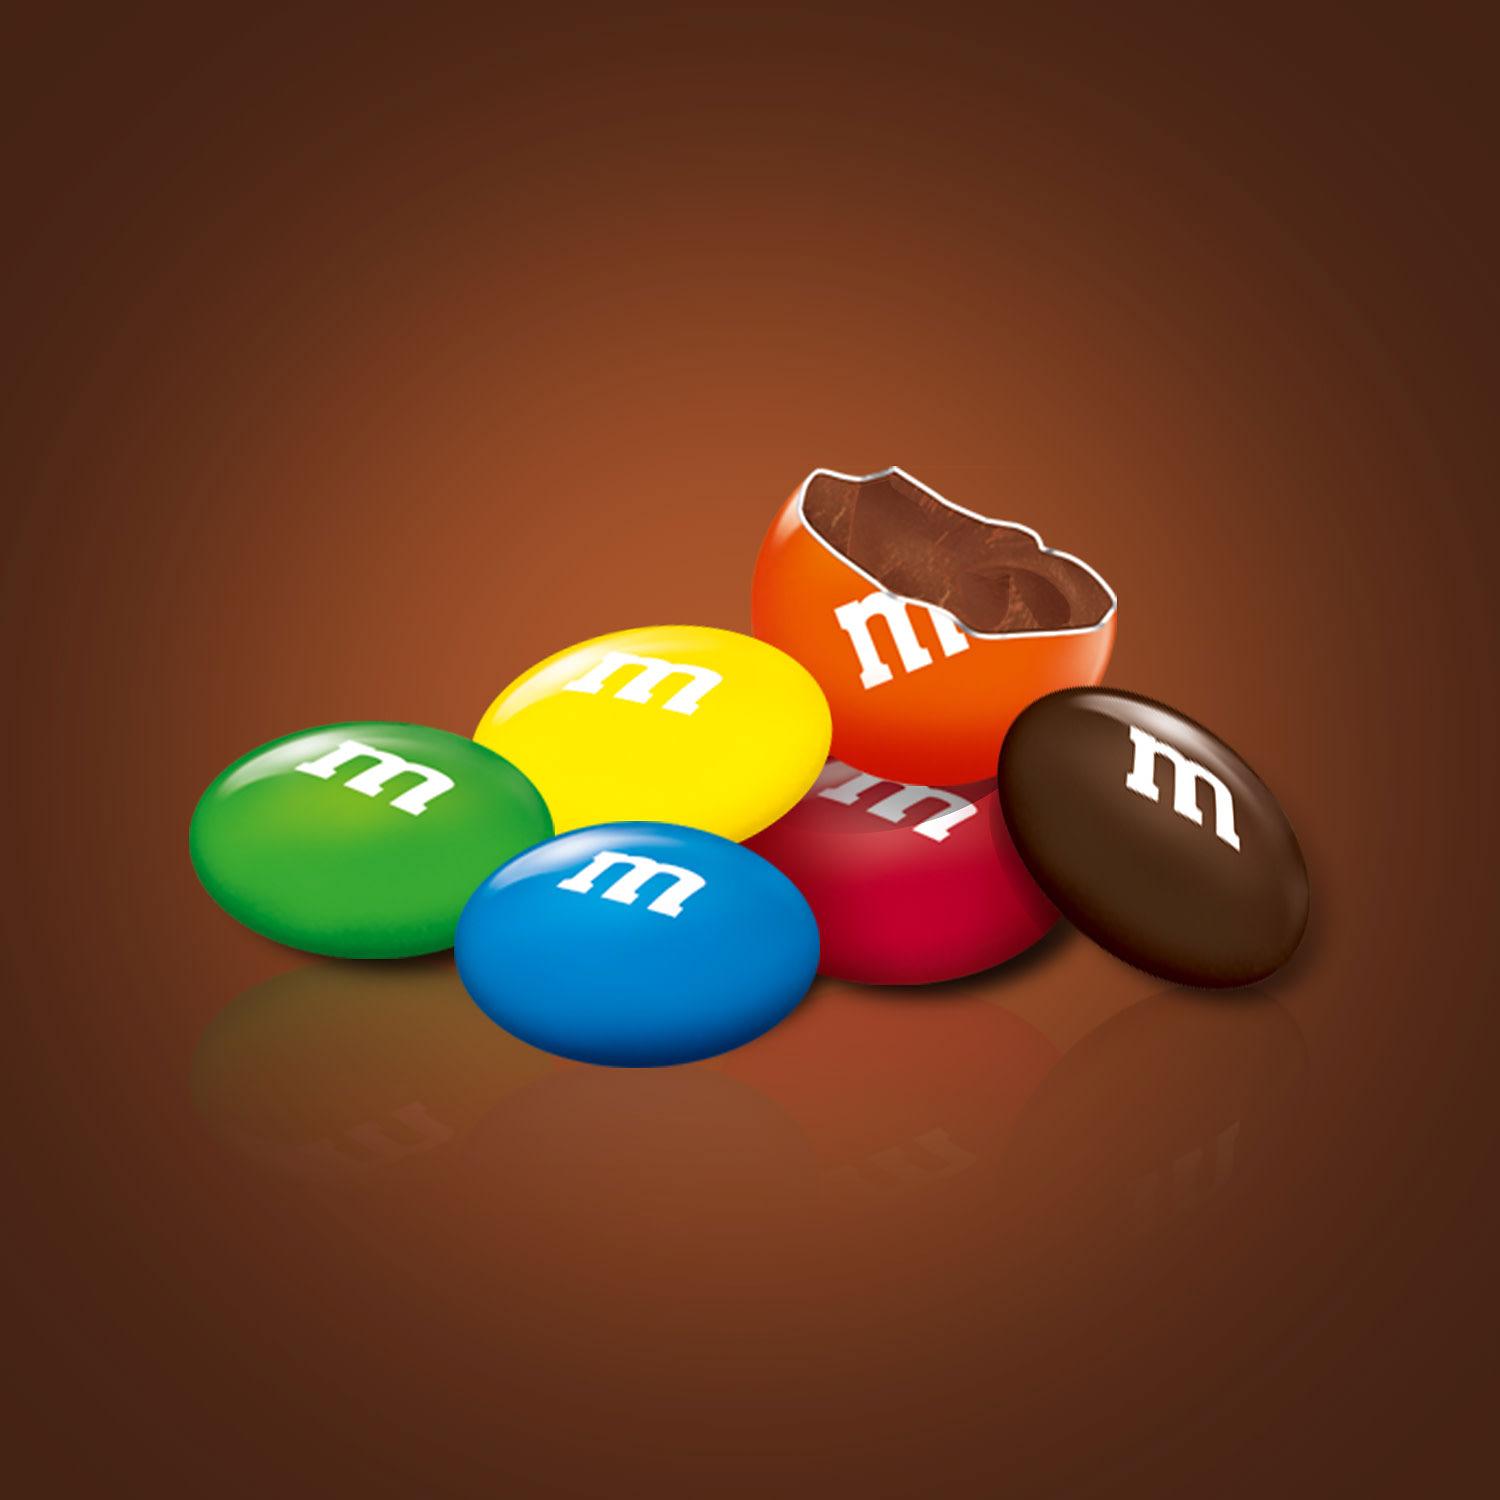  M&M's Peanut Candy 62 Oz Pantry Size Resealable Bag